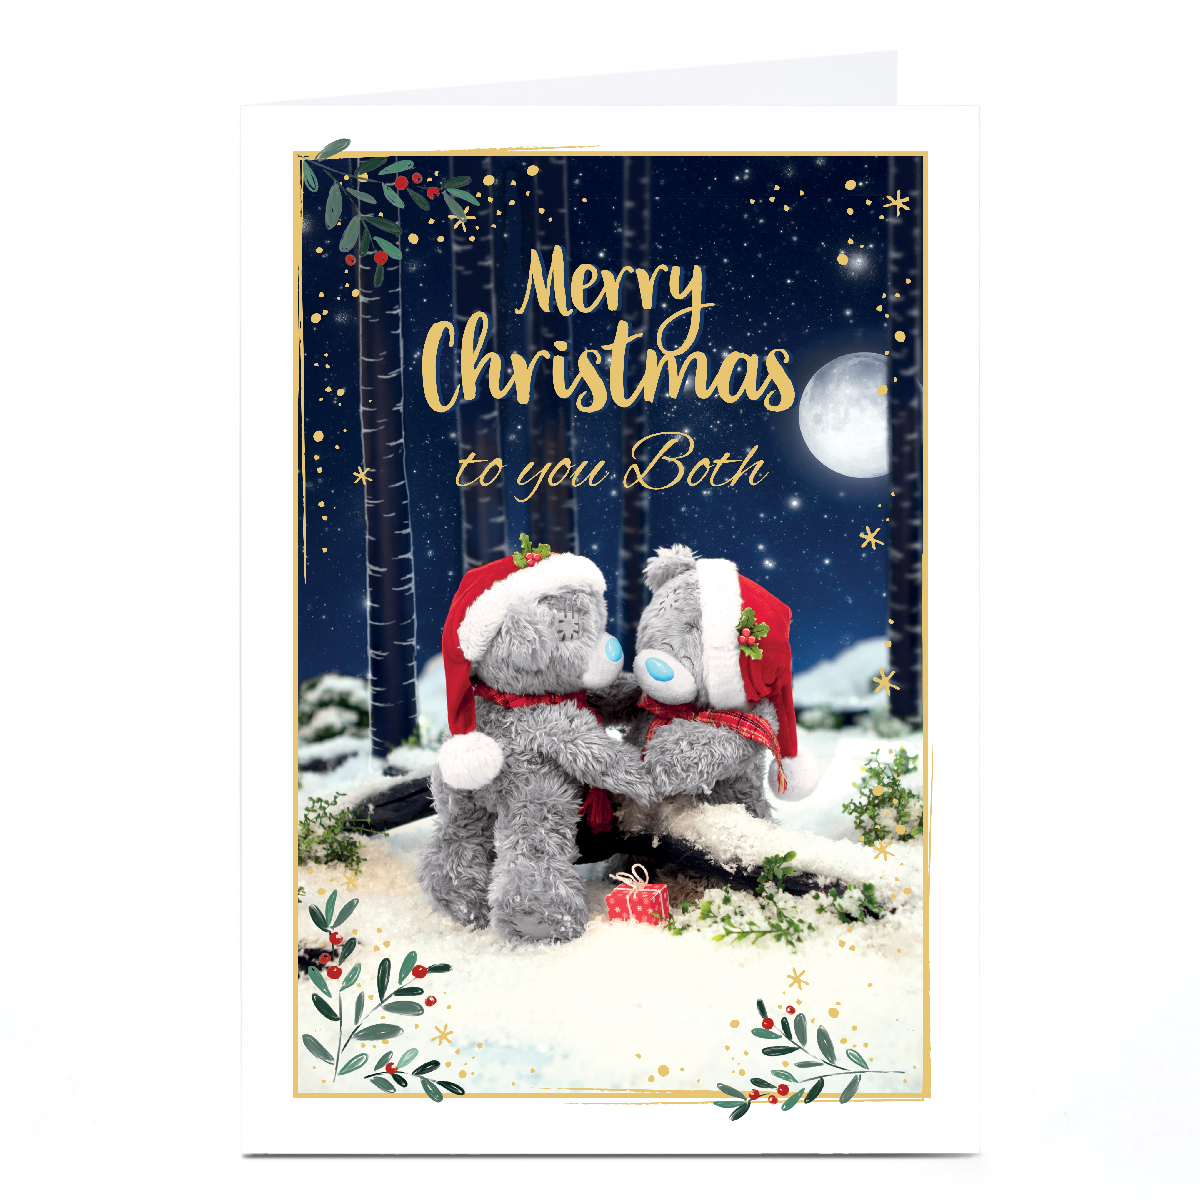 Personalised Tatty Teddy Christmas Card - Merry Christmas Bears, To You Both